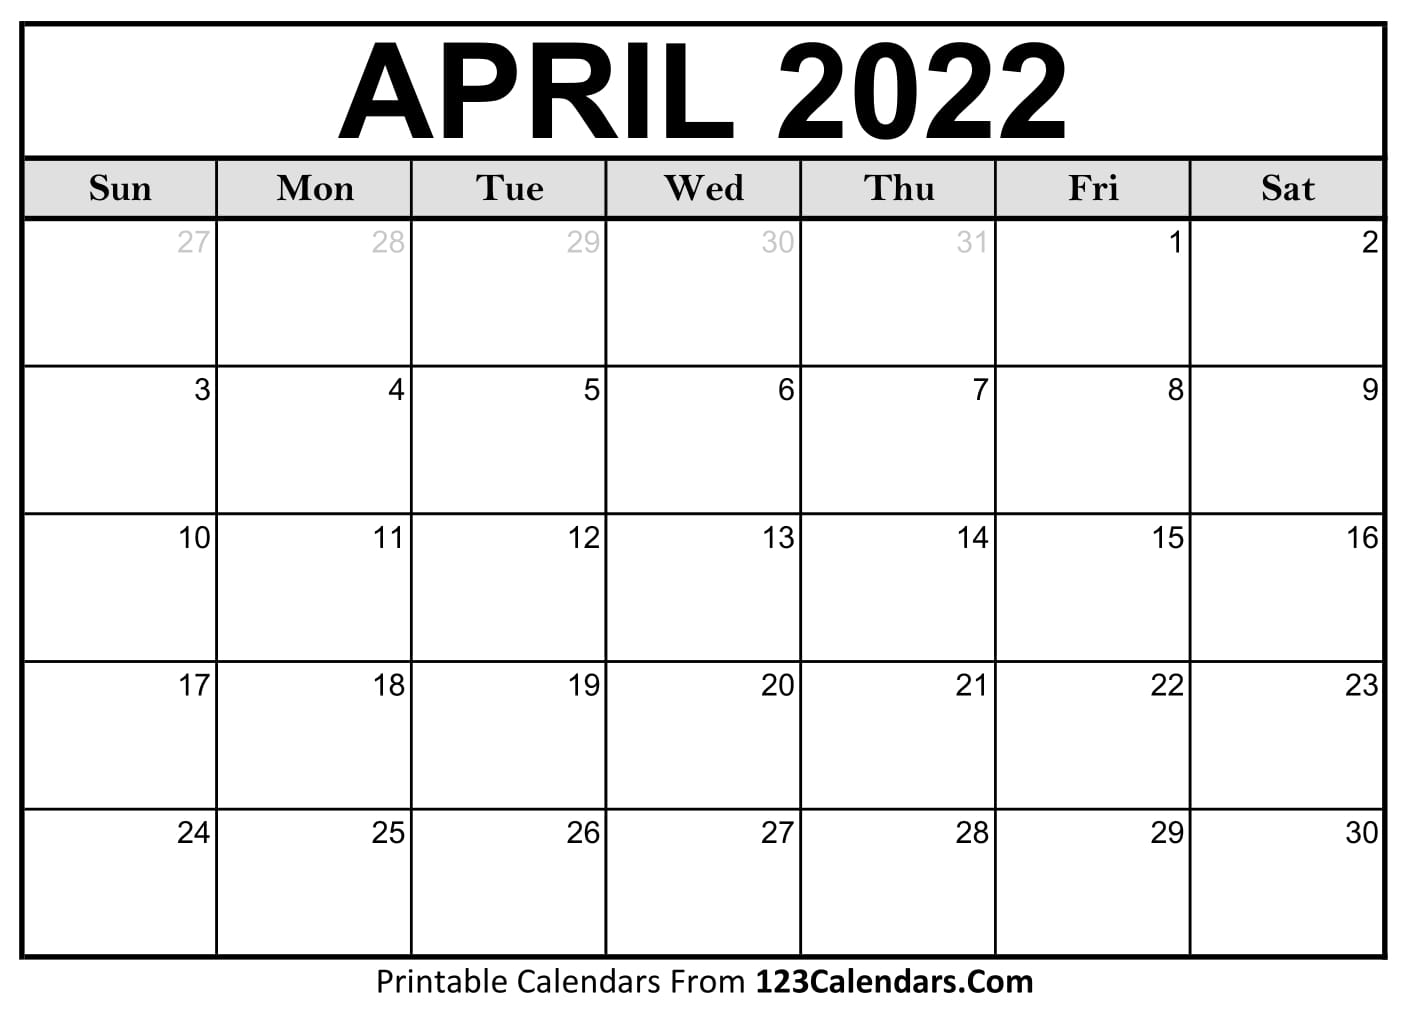 Printable 2022 April Calendar Printable April 2022 Calendar Templates - 123Calendars.com